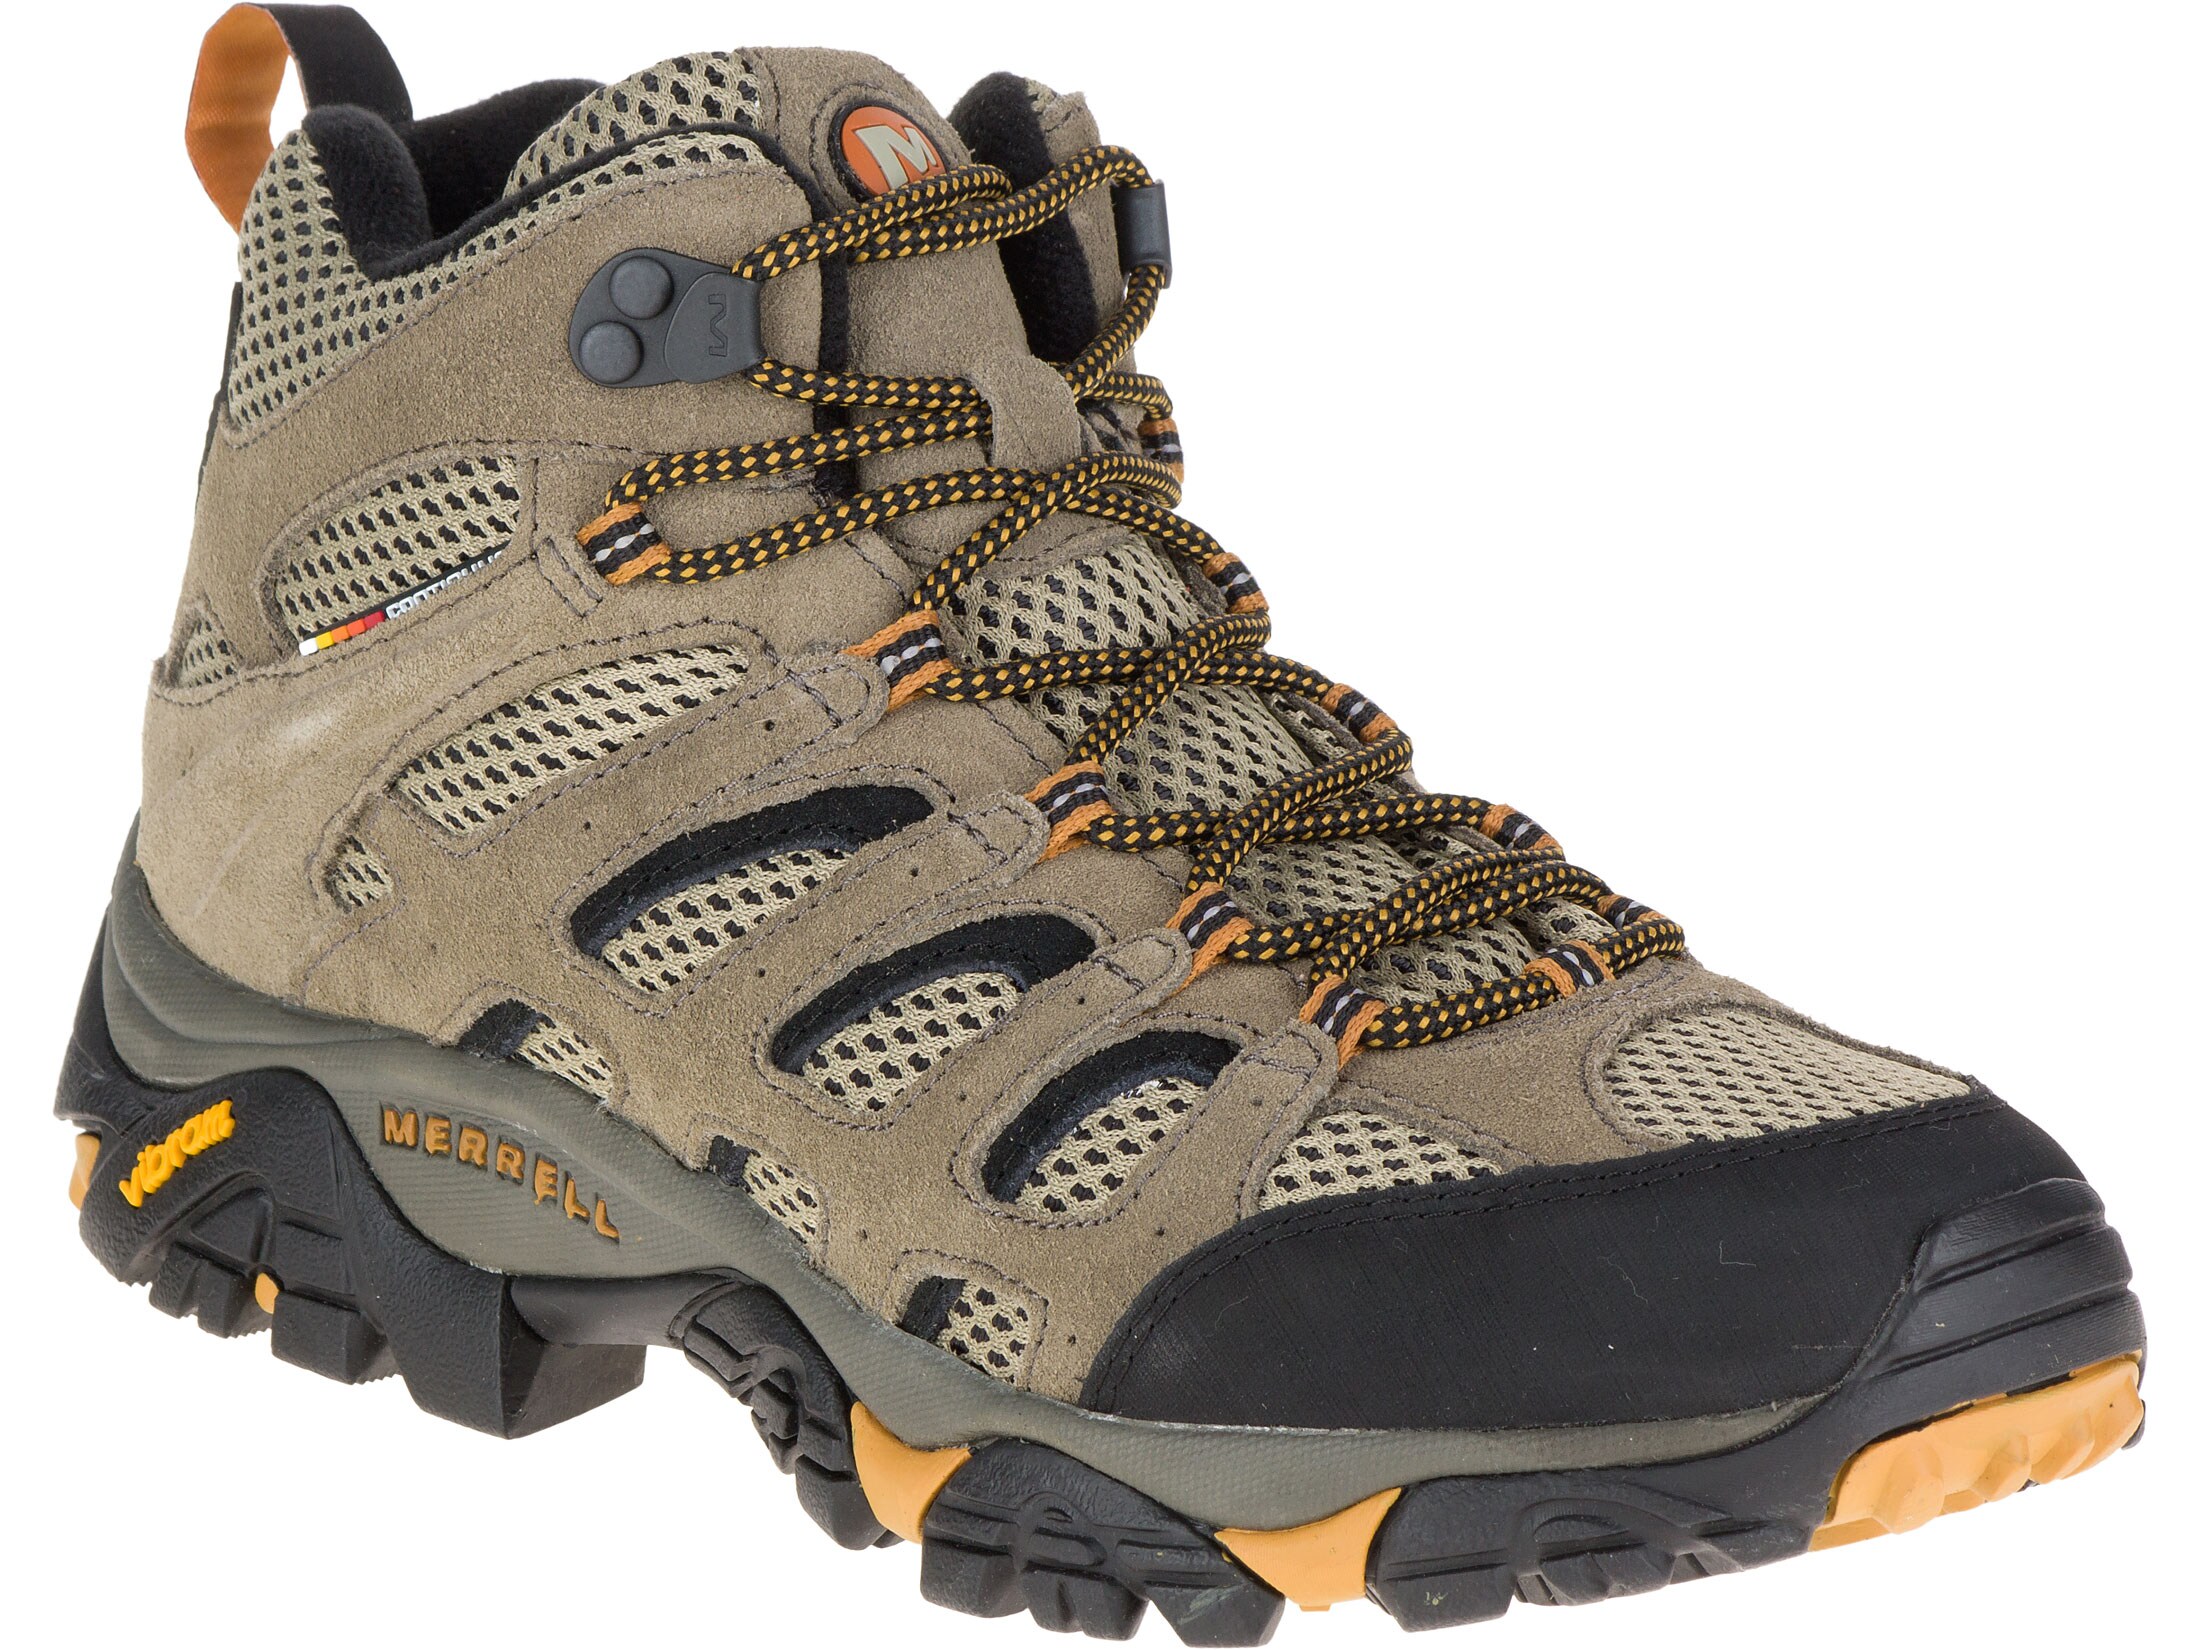 Merrell Moab Vent Mid 5 Hiking Boots Leather Mesh Walnut Men's 10.5 D